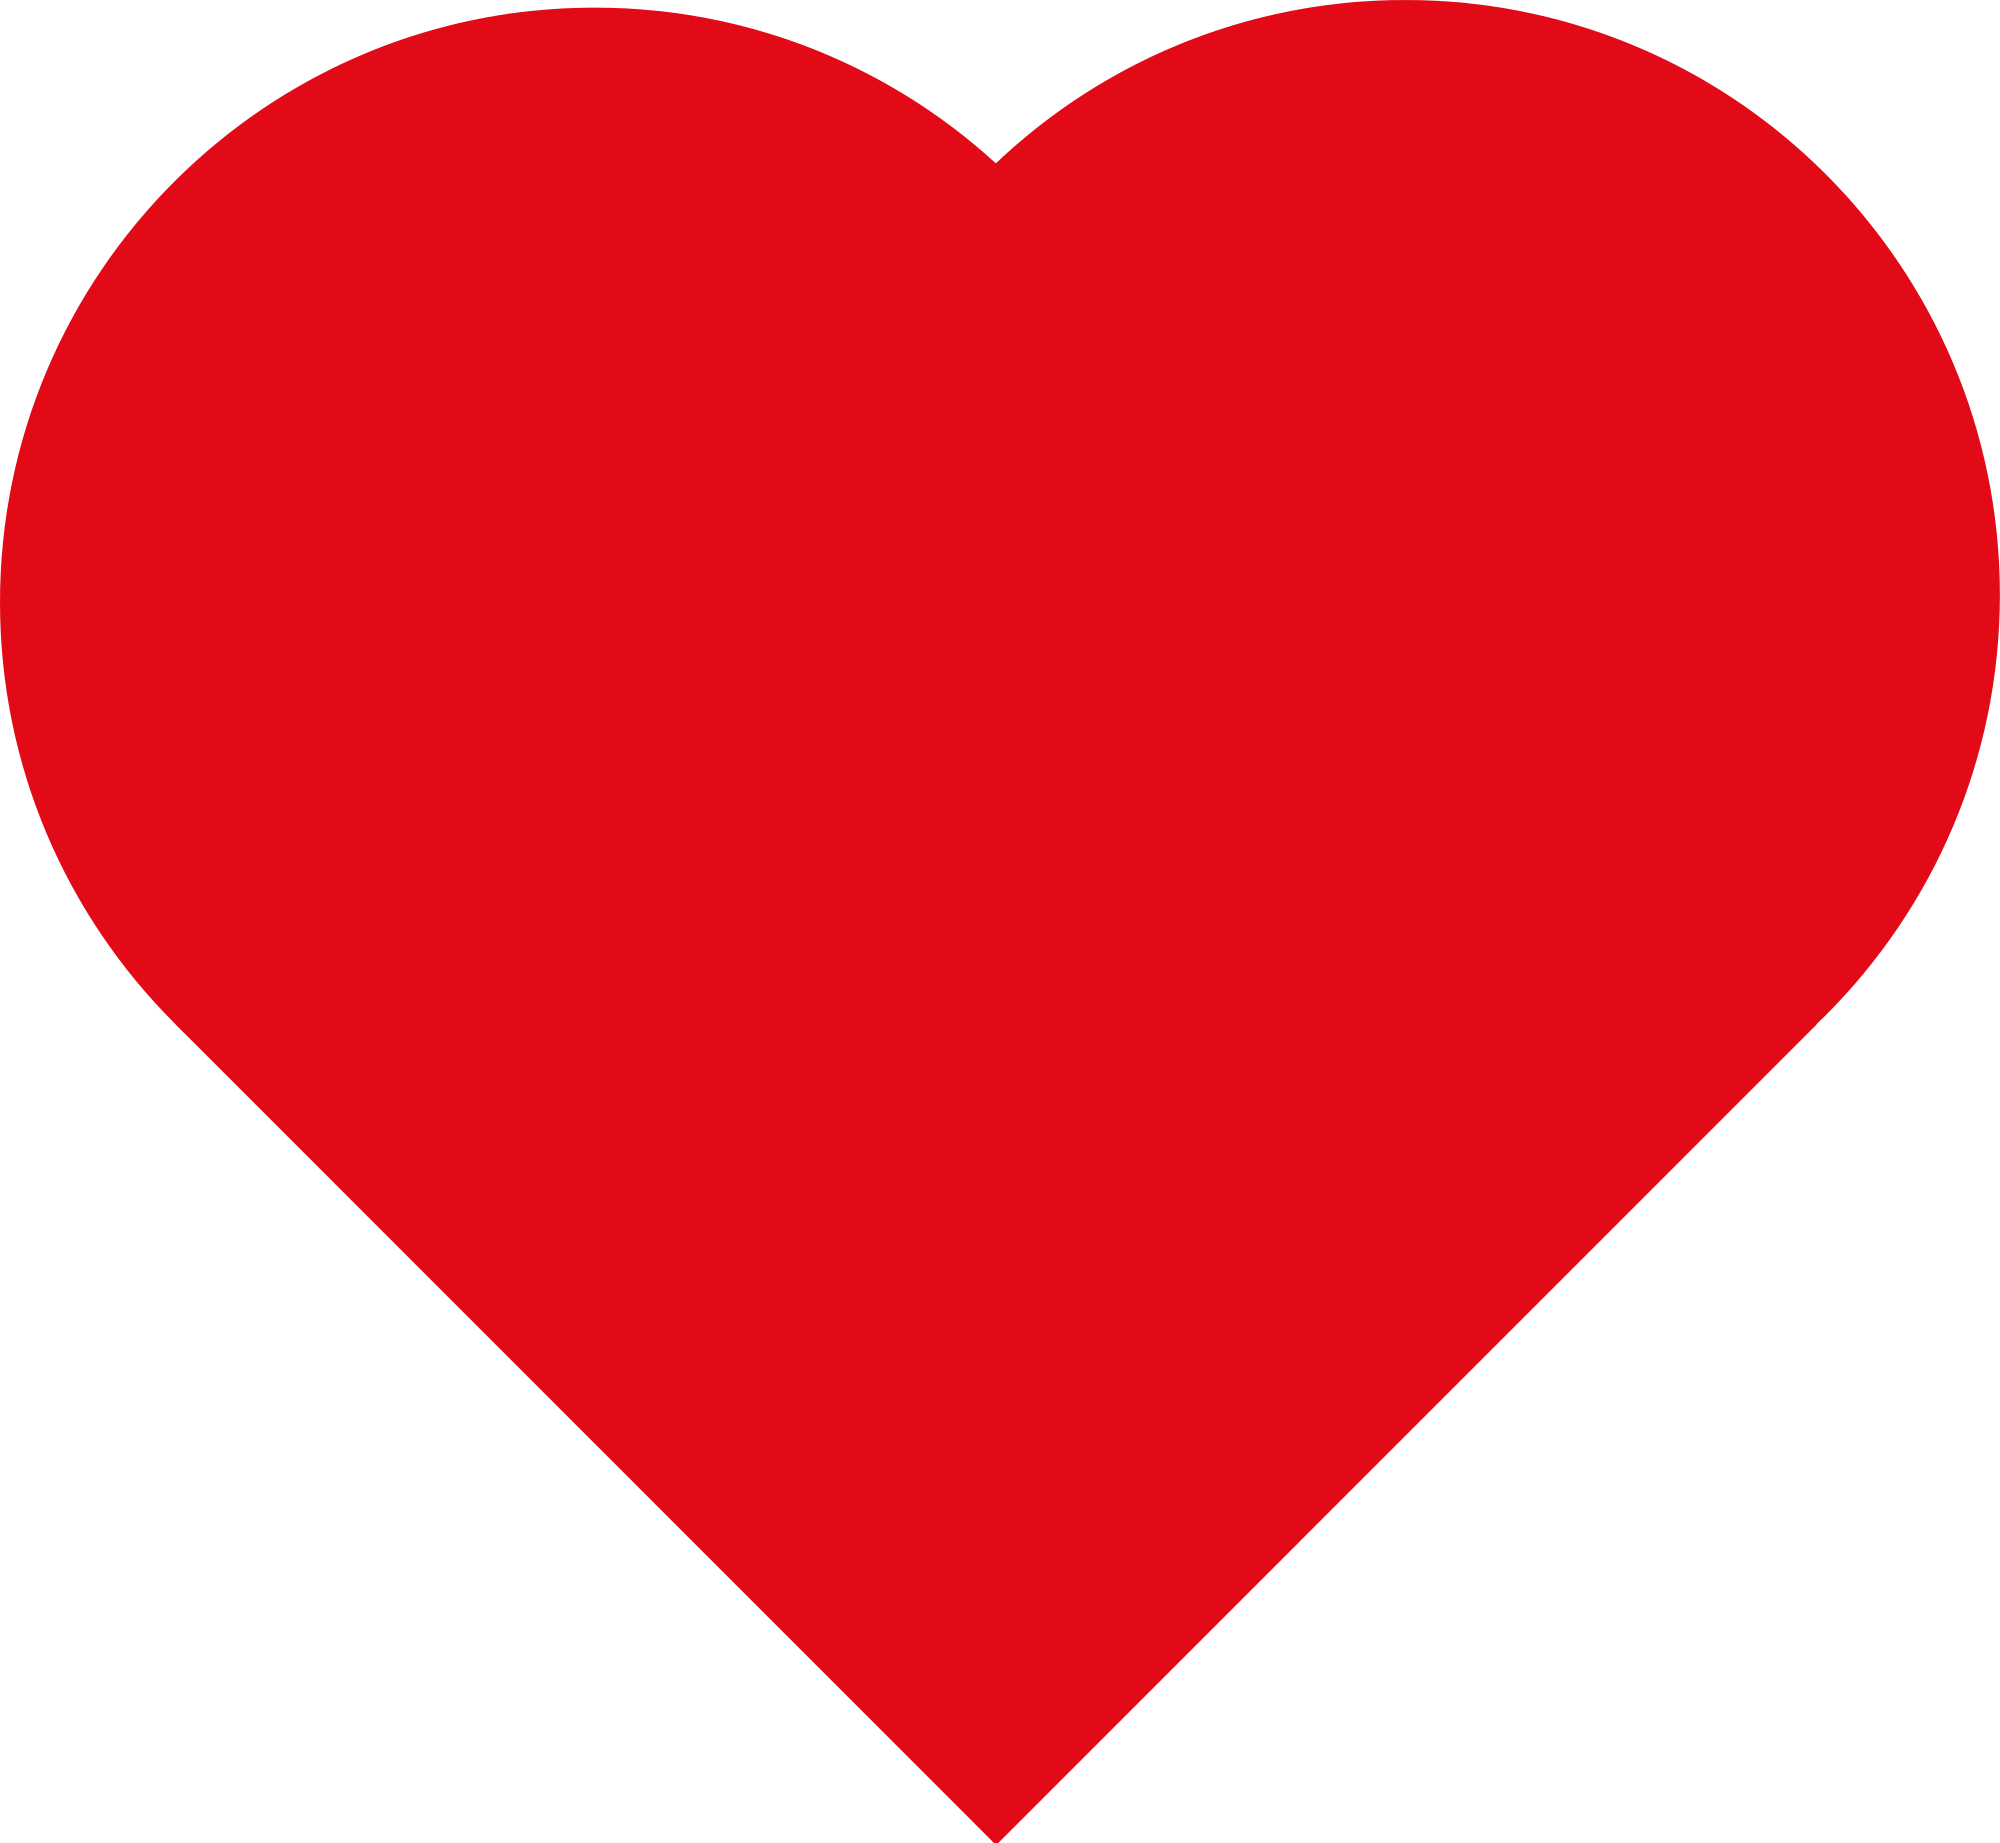 Heart Love PNG Transparent Image